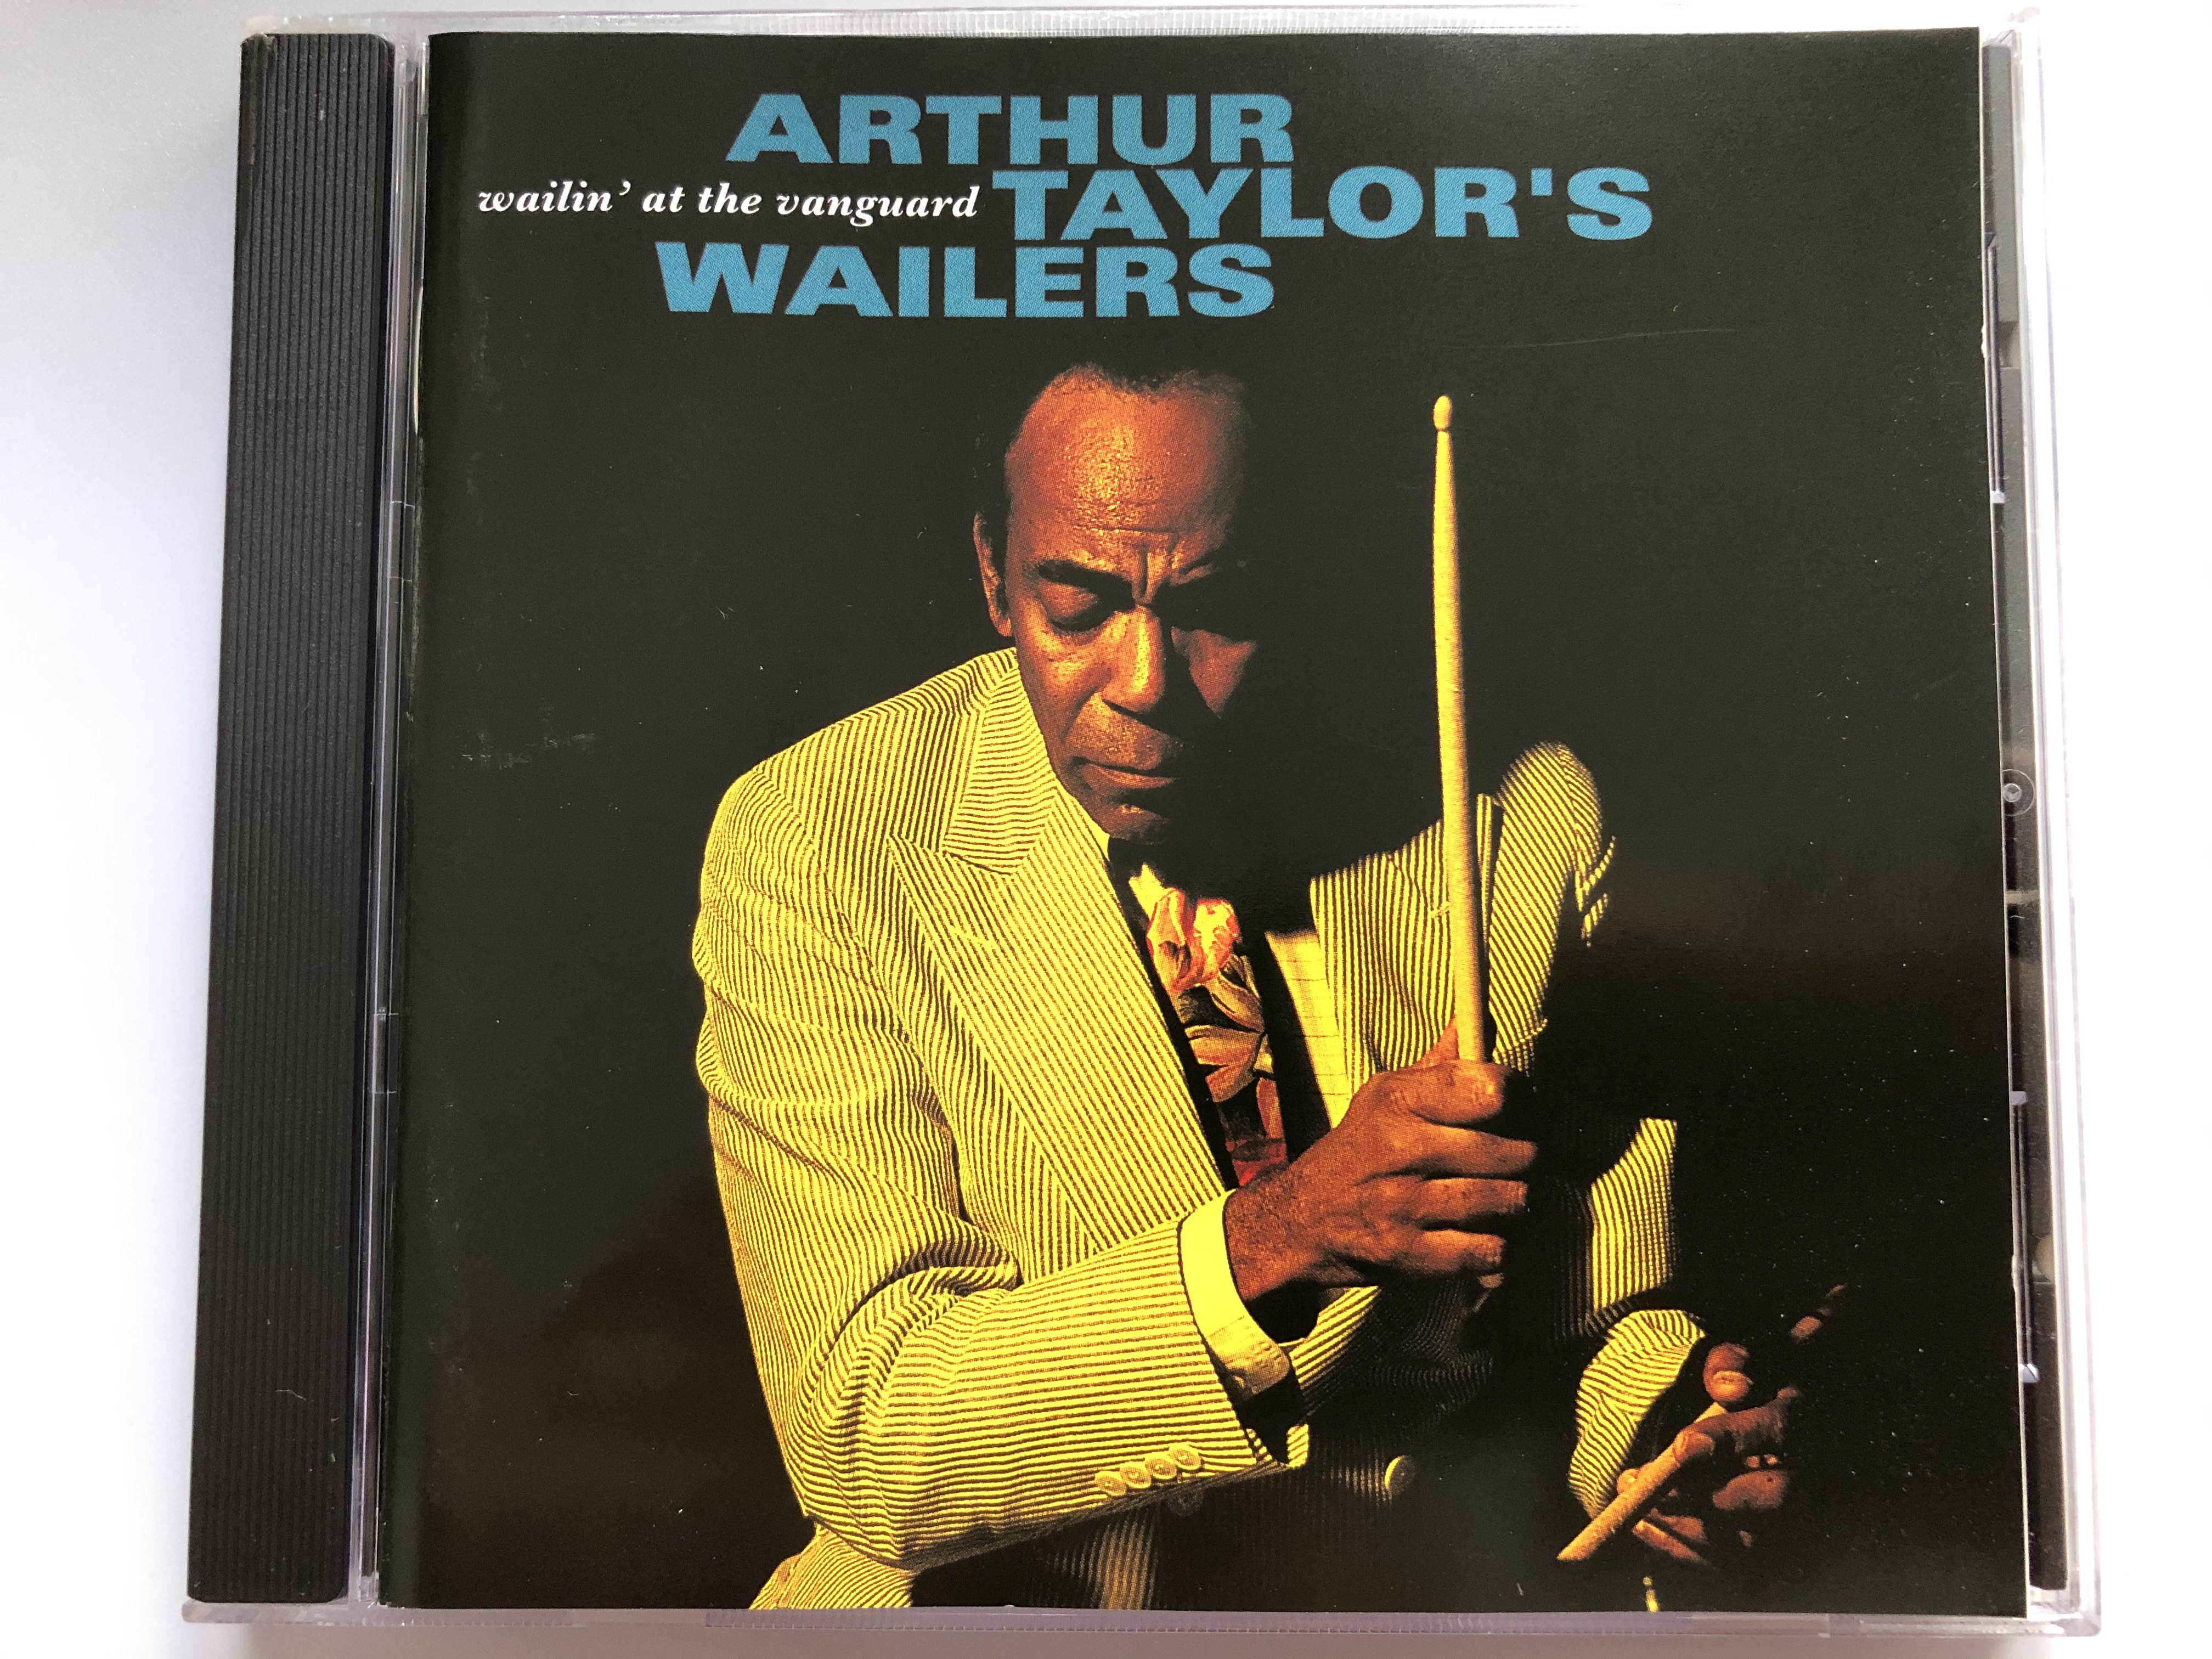 arthur-taylor-s-wailers-wailin-at-the-vanguard-verve-records-audio-cd-1993-519-677-2-1-.jpg